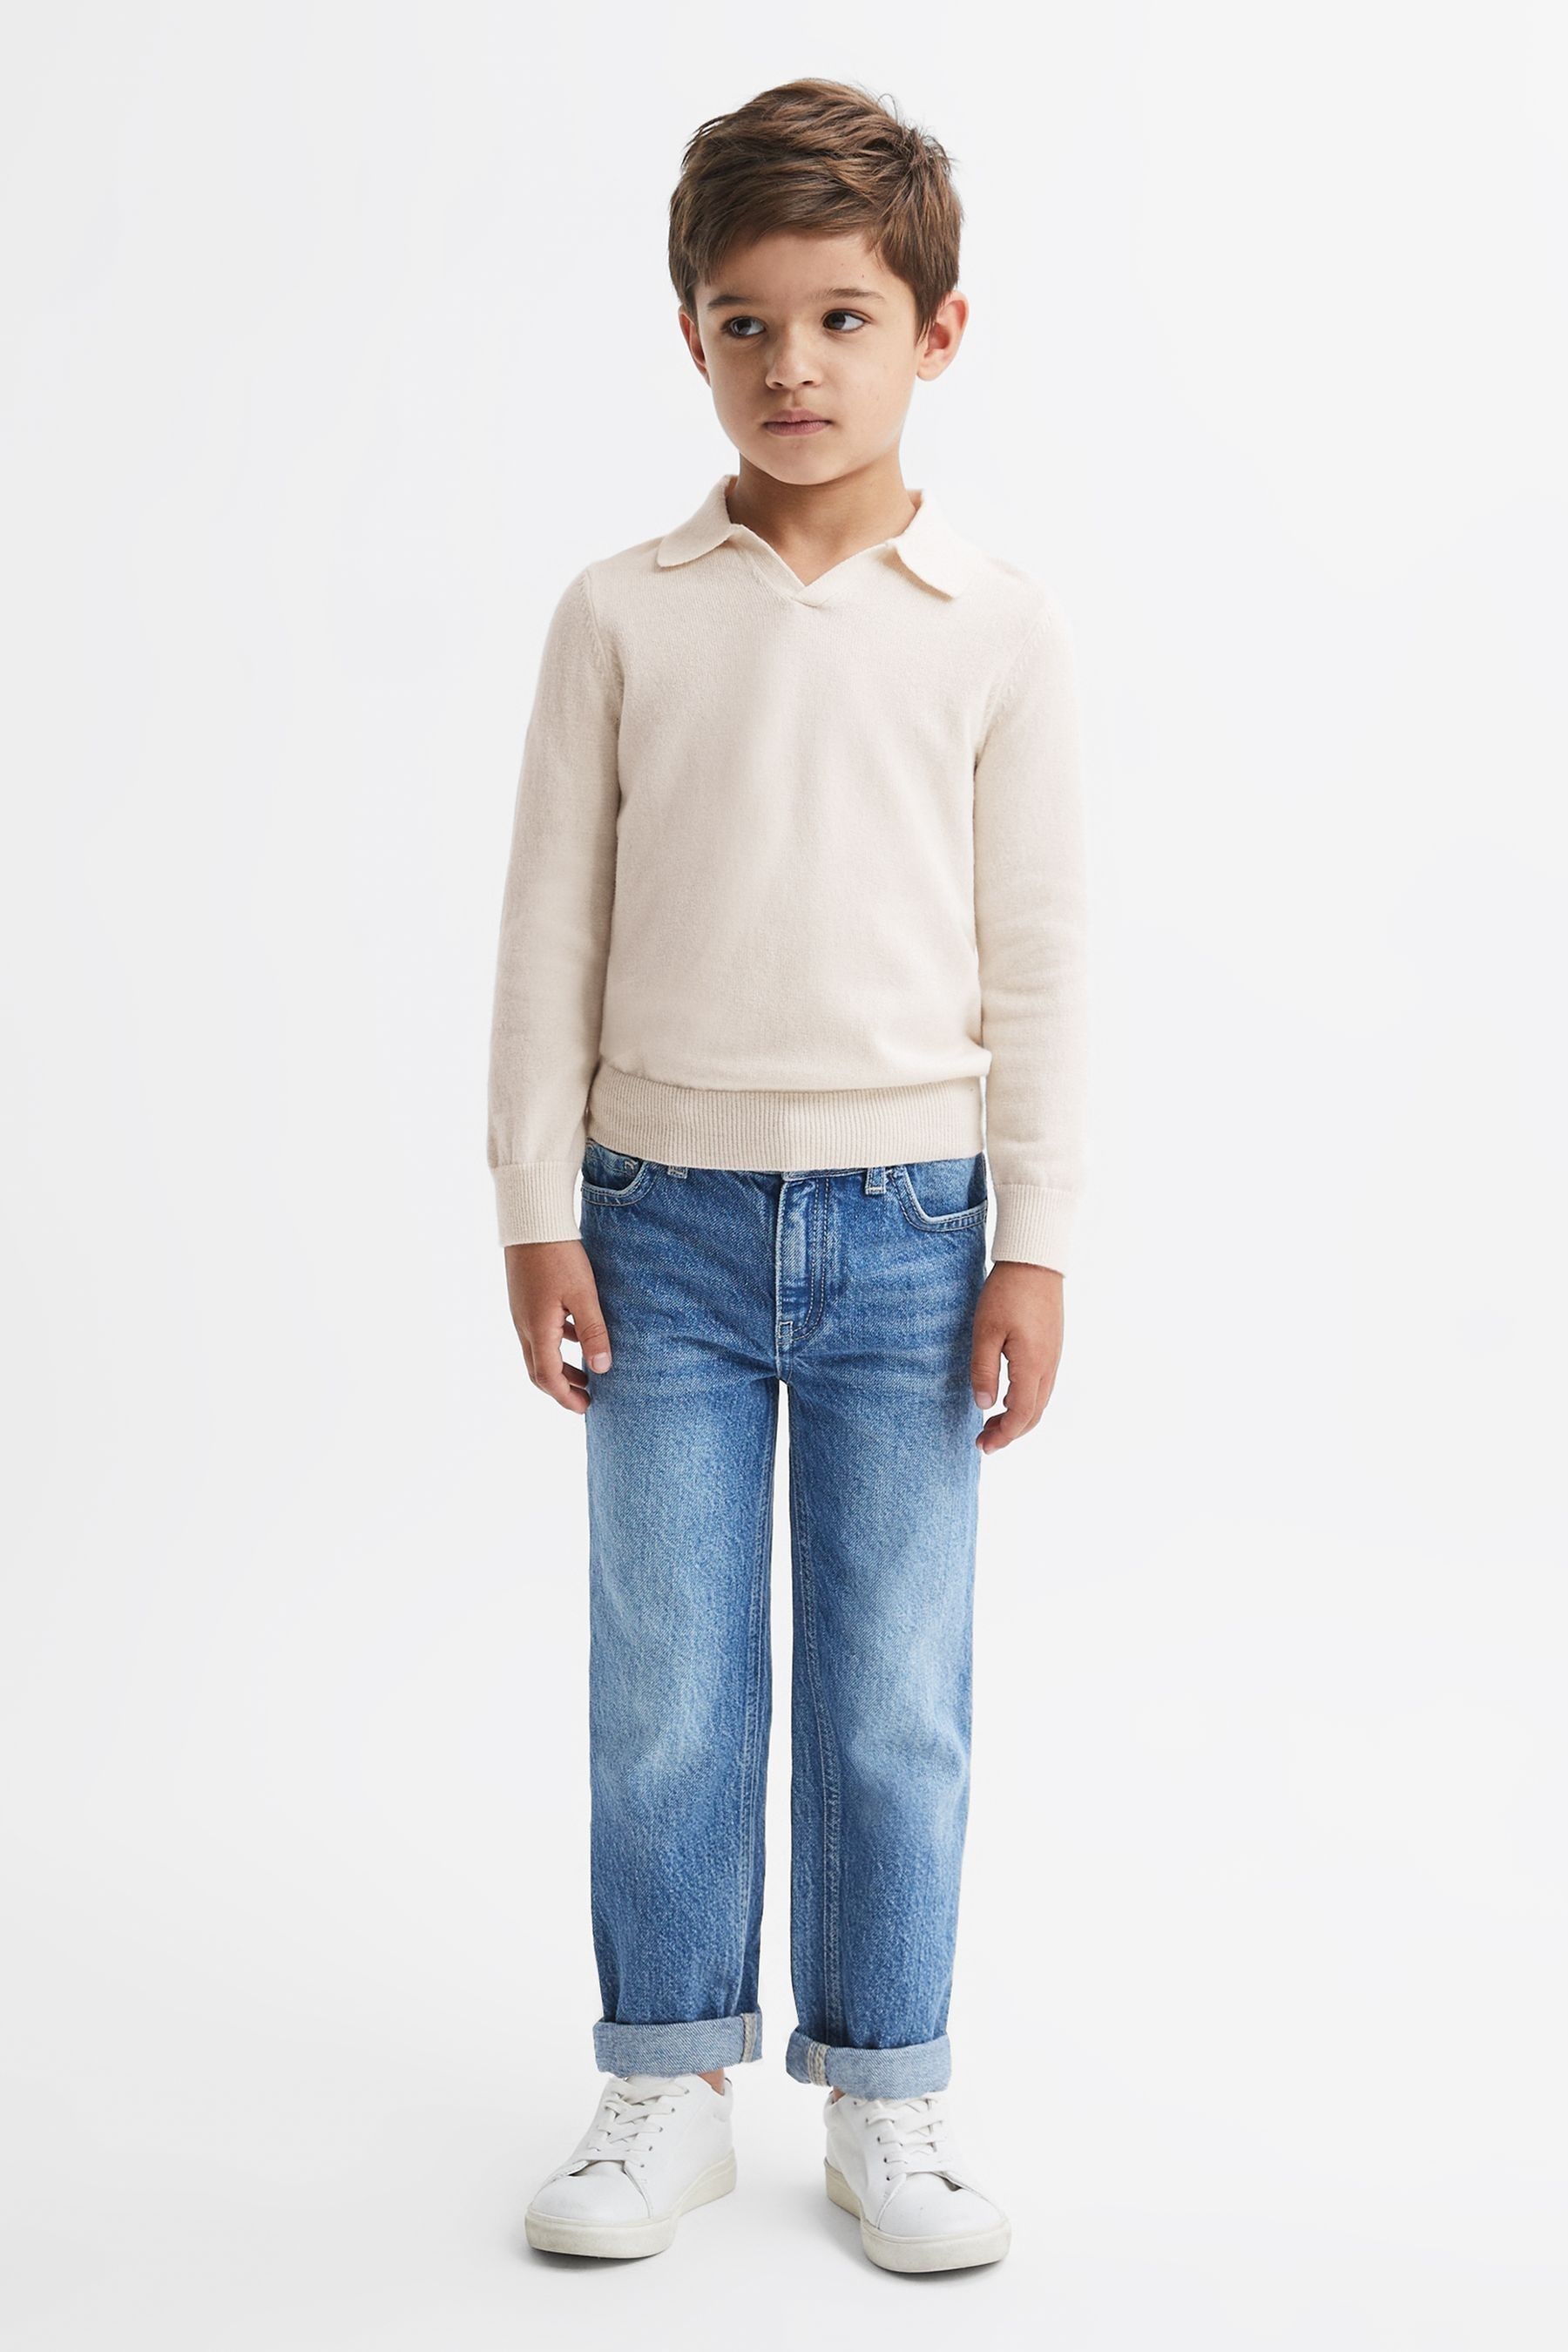 Reiss Swifts - Milk Junior Slim Fit Merino Wool Open Collar Top, Age 5-6 Years